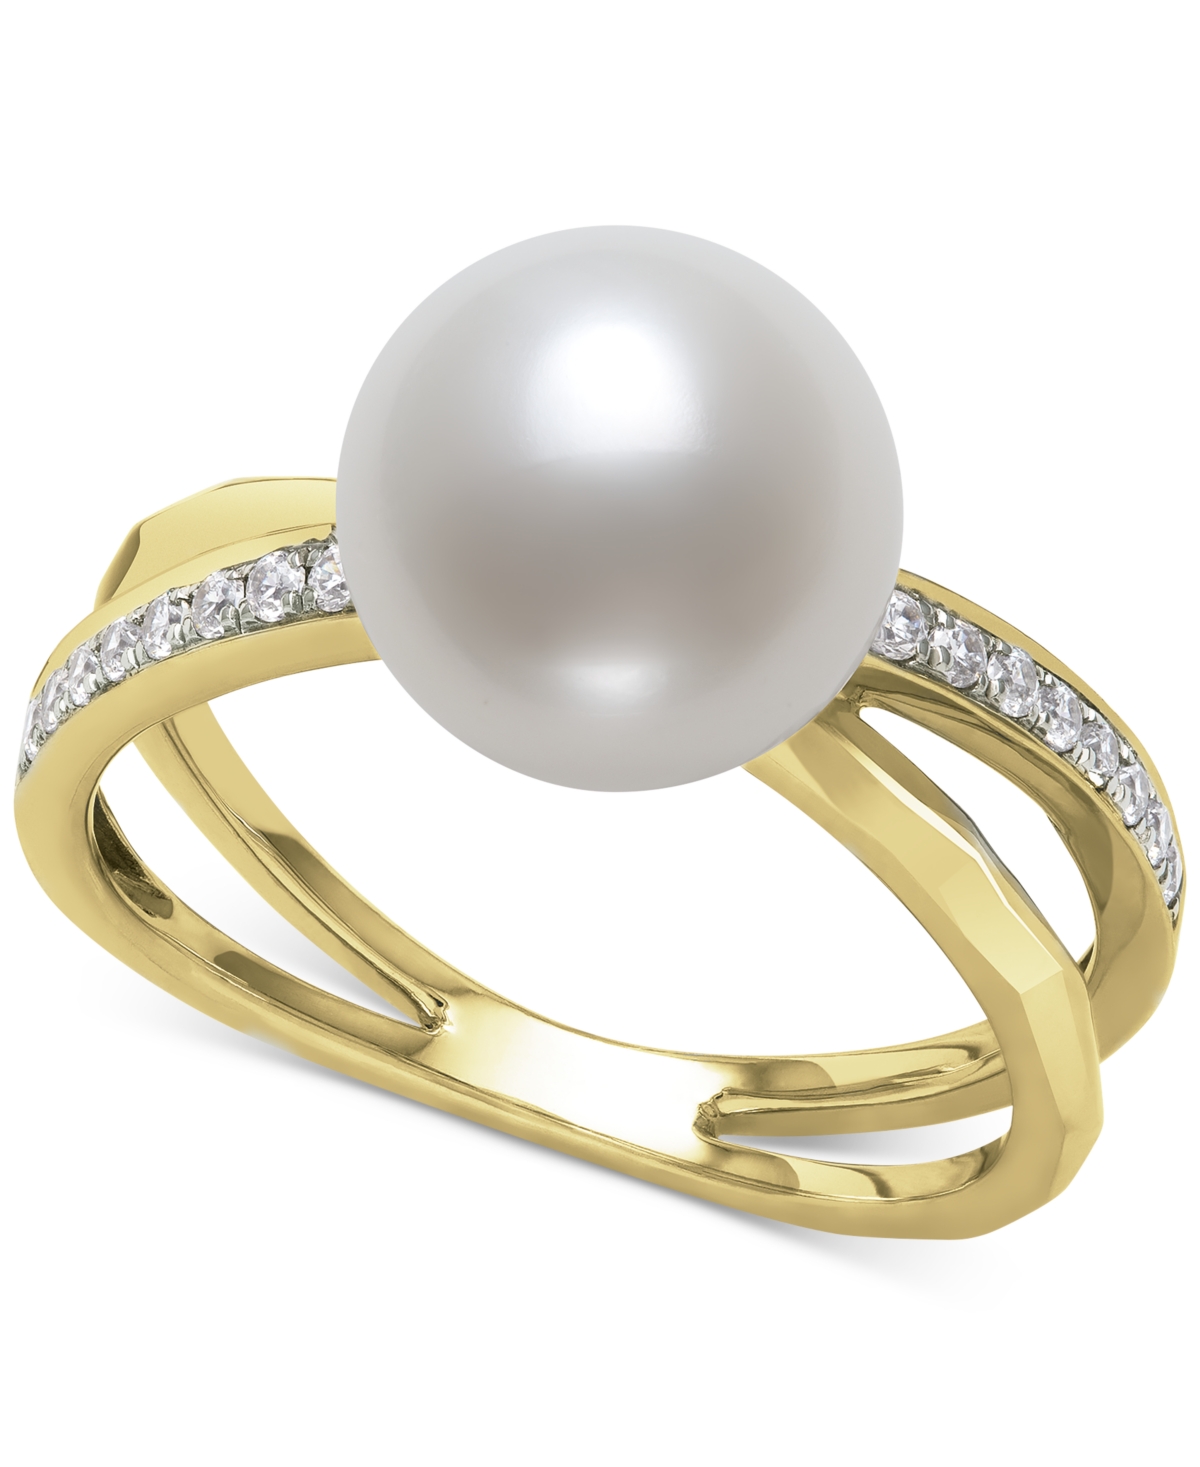 Belle de Mer Cultured Freshwater Pearl (8mm) & Diamond (1/10 ct. t.w.) Crisscross Ring in 14k White Gold, Created for Macy's